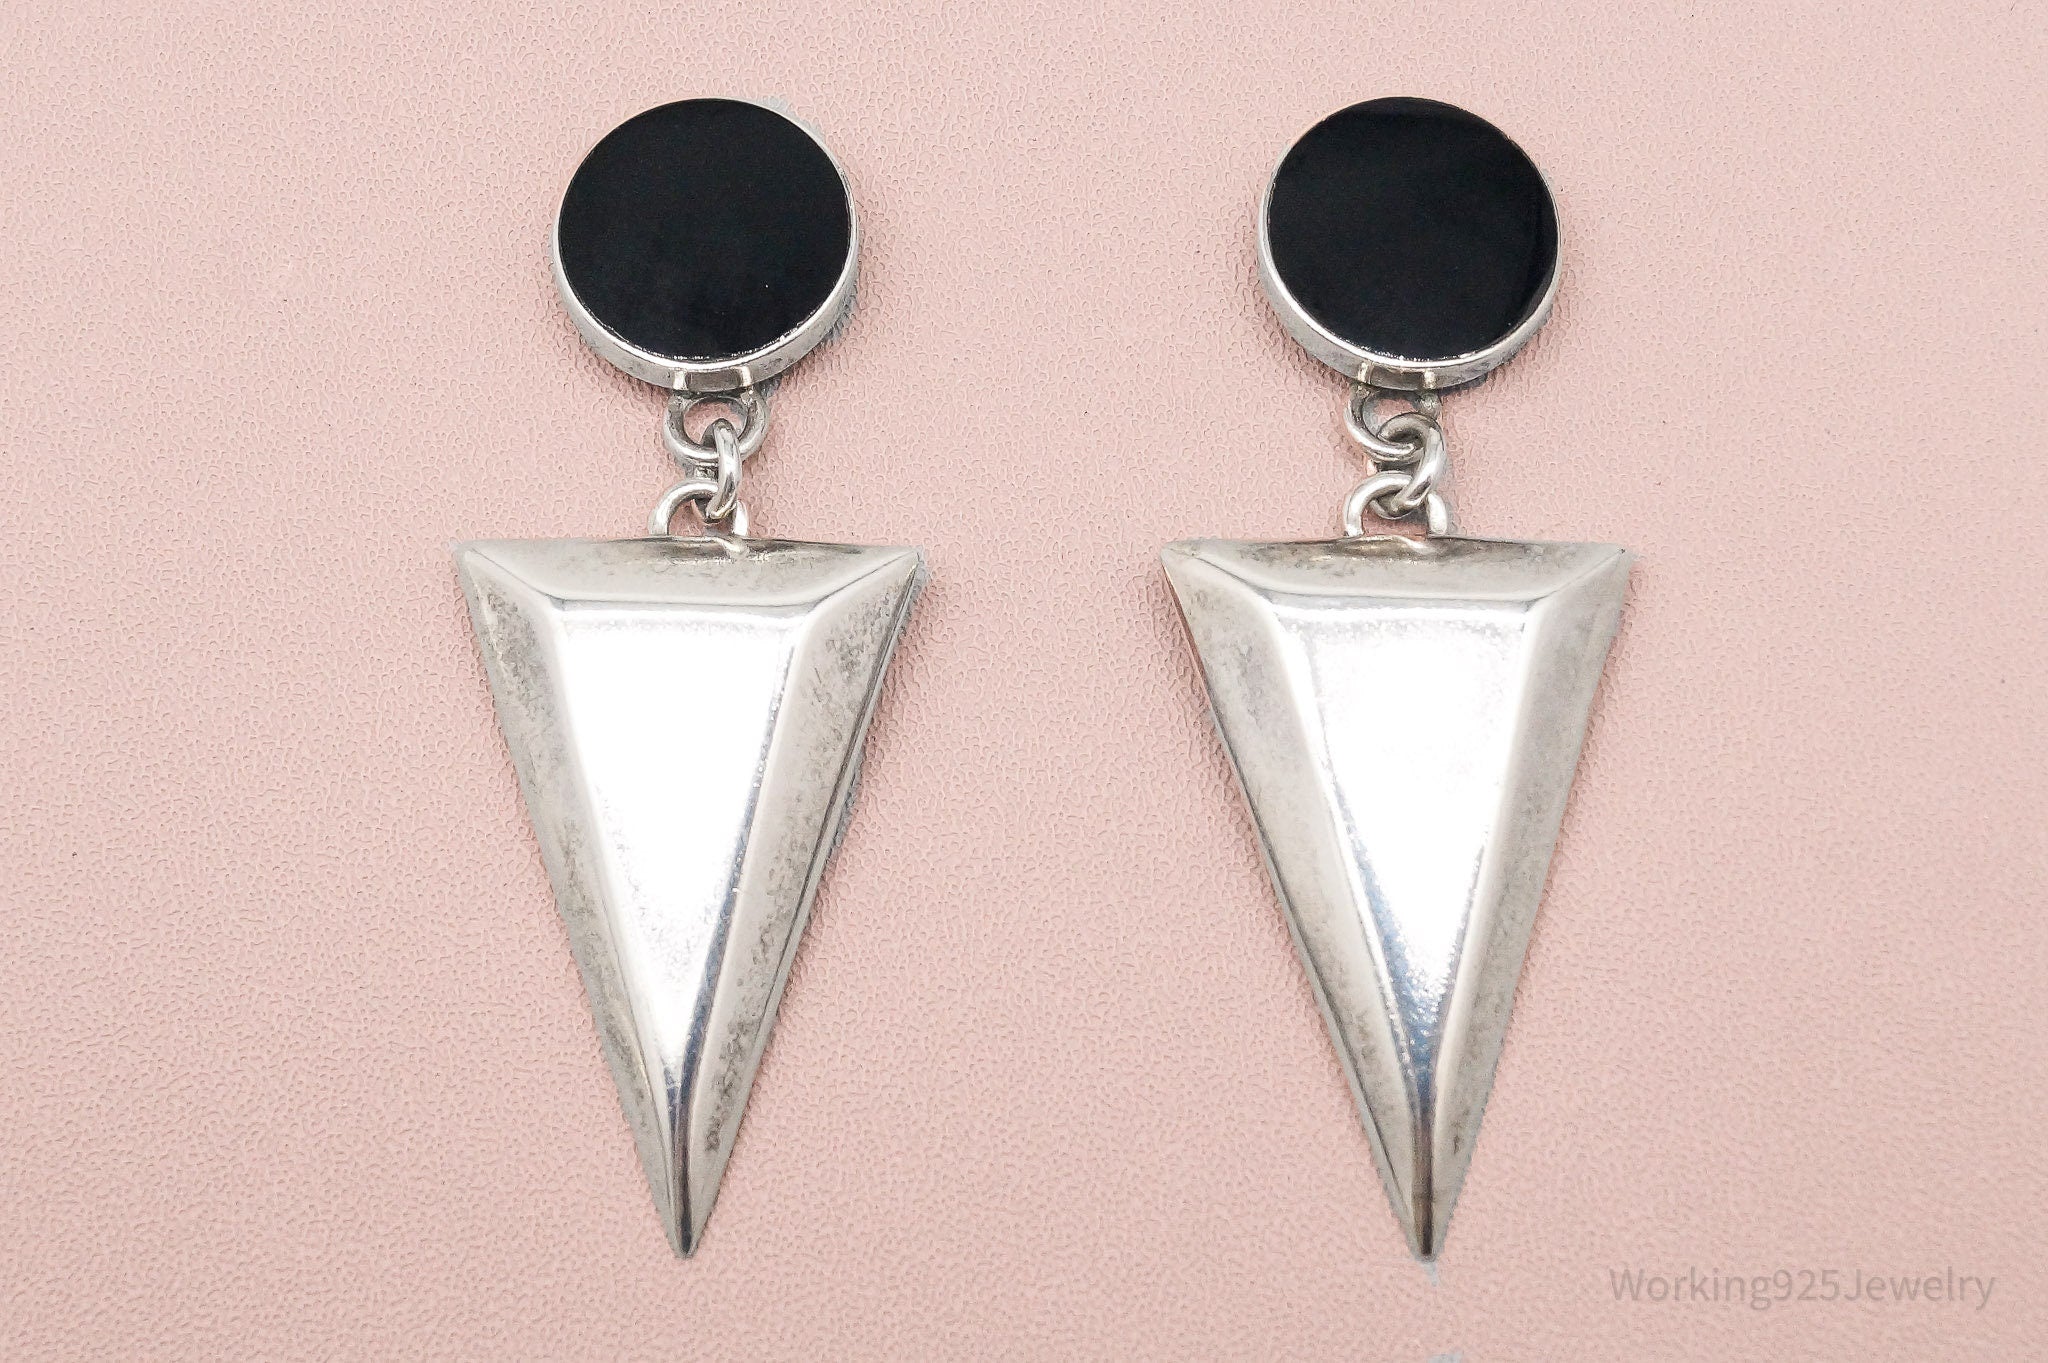 Vintage Modernist Black Onyx Sterling Silver Earrings